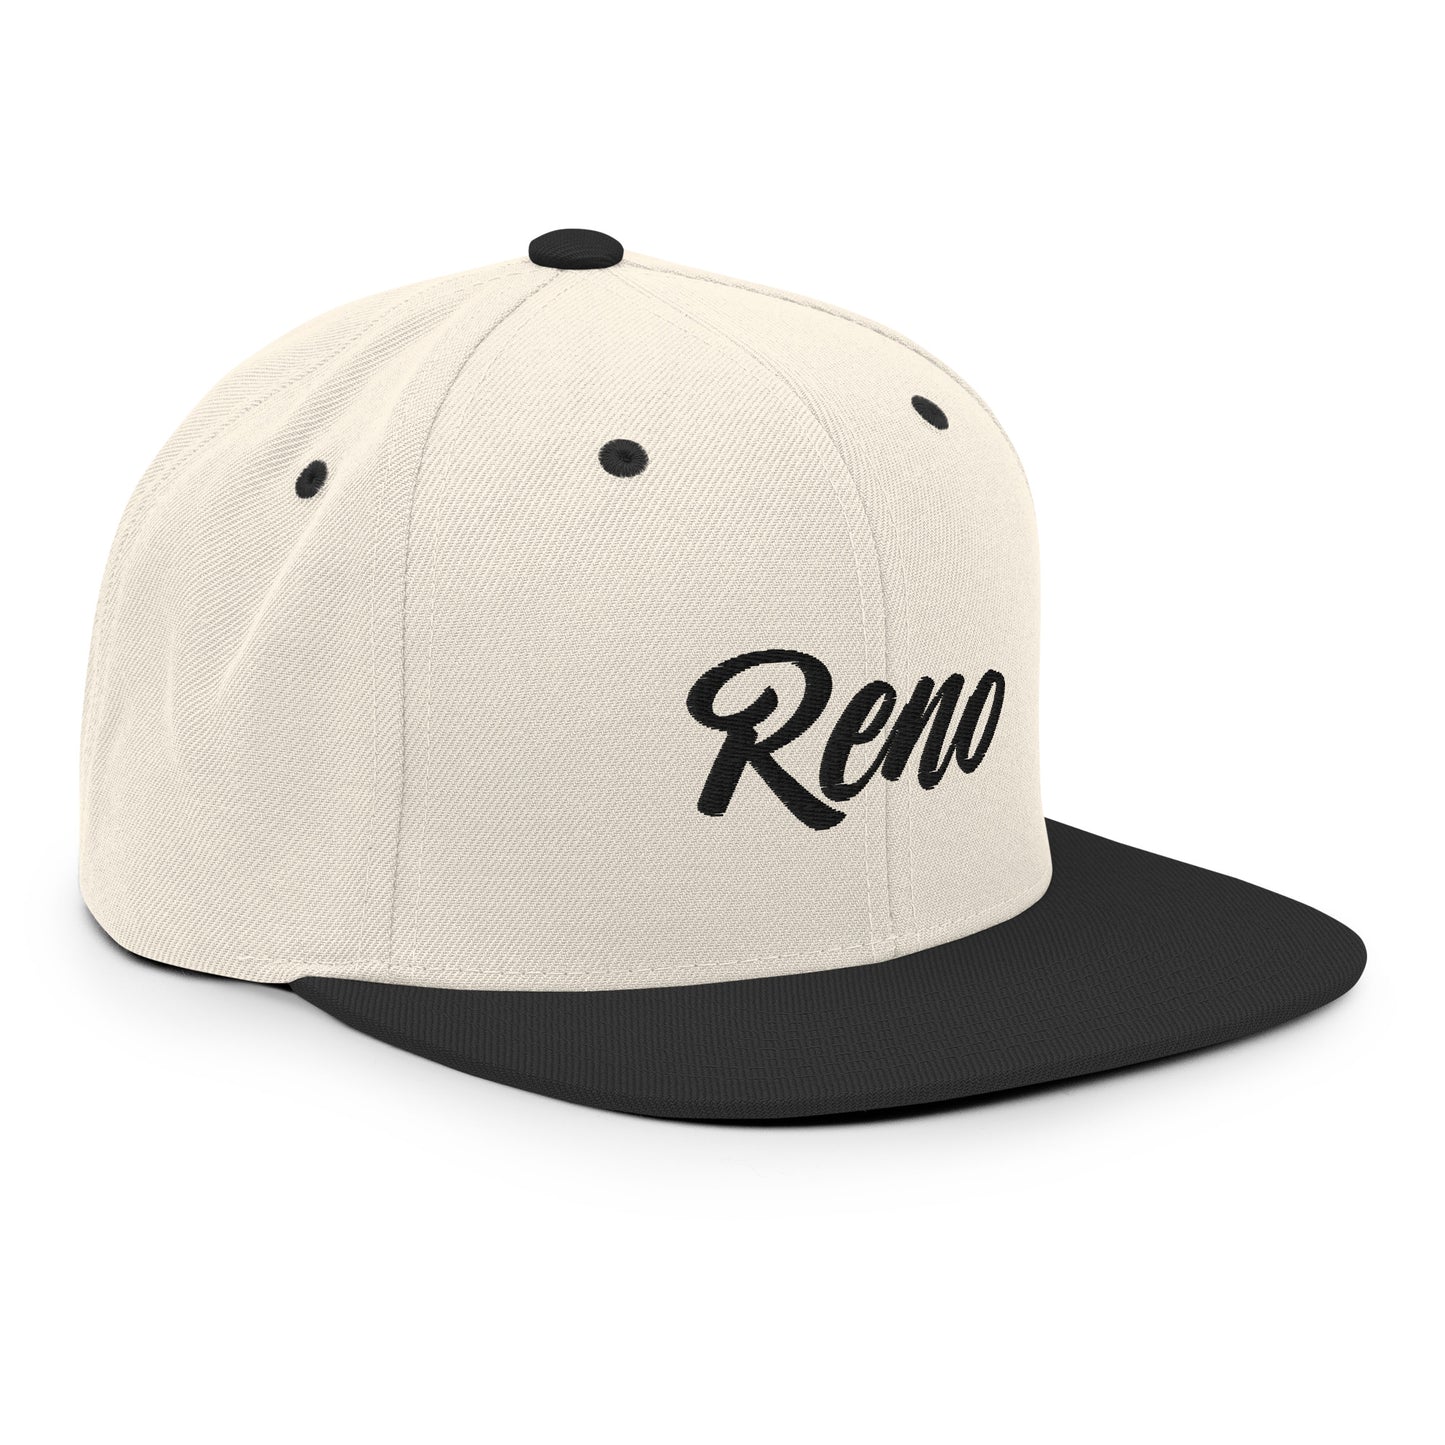 Reno Snapback Hat 14